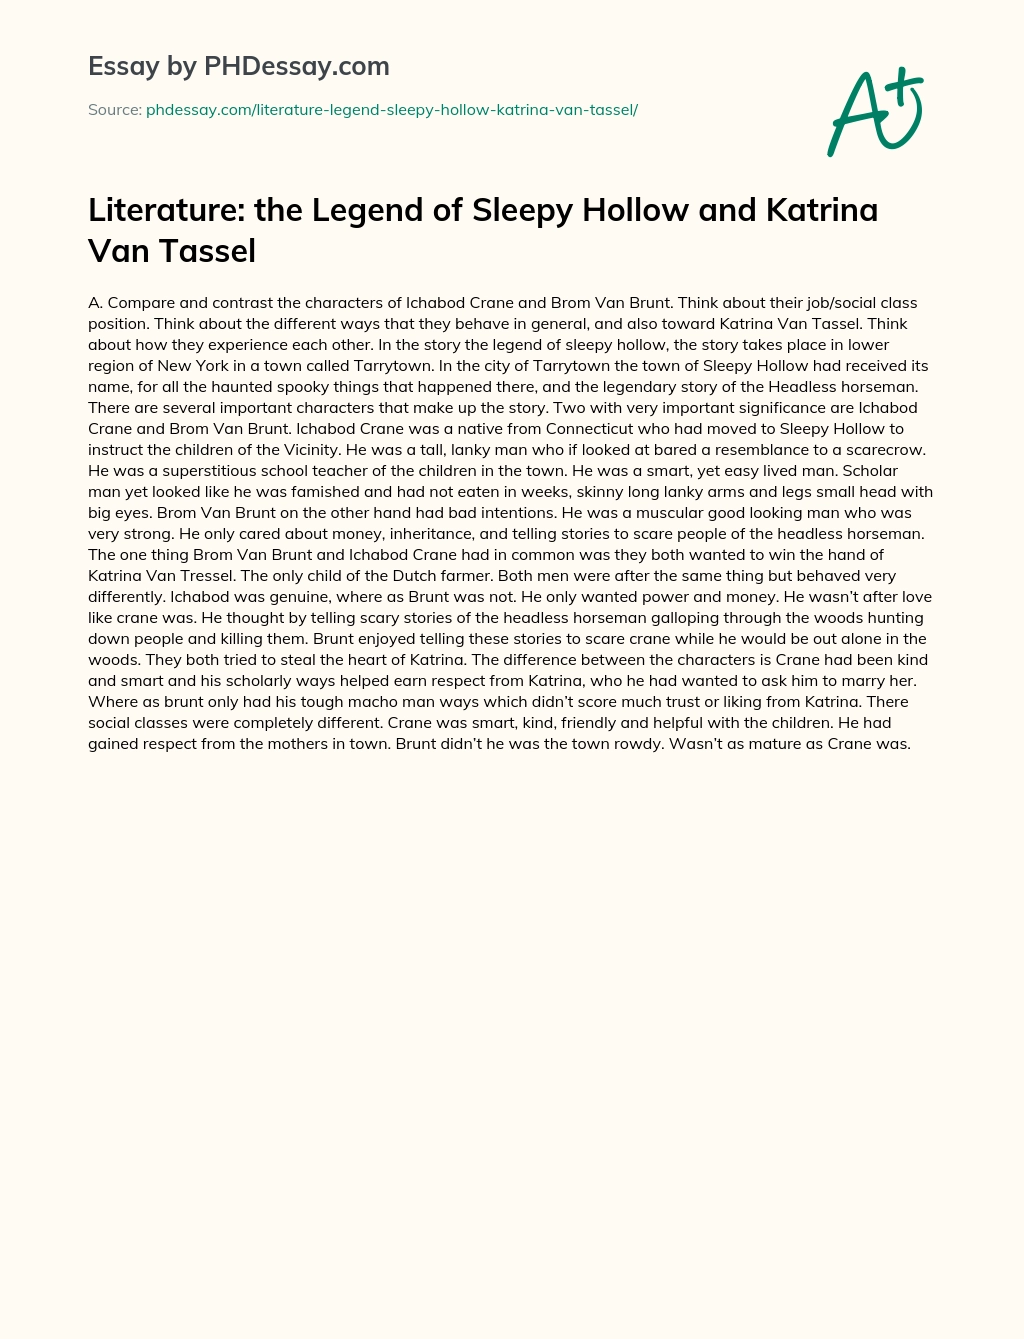 Literature: the Legend of Sleepy Hollow and Katrina Van Tassel essay